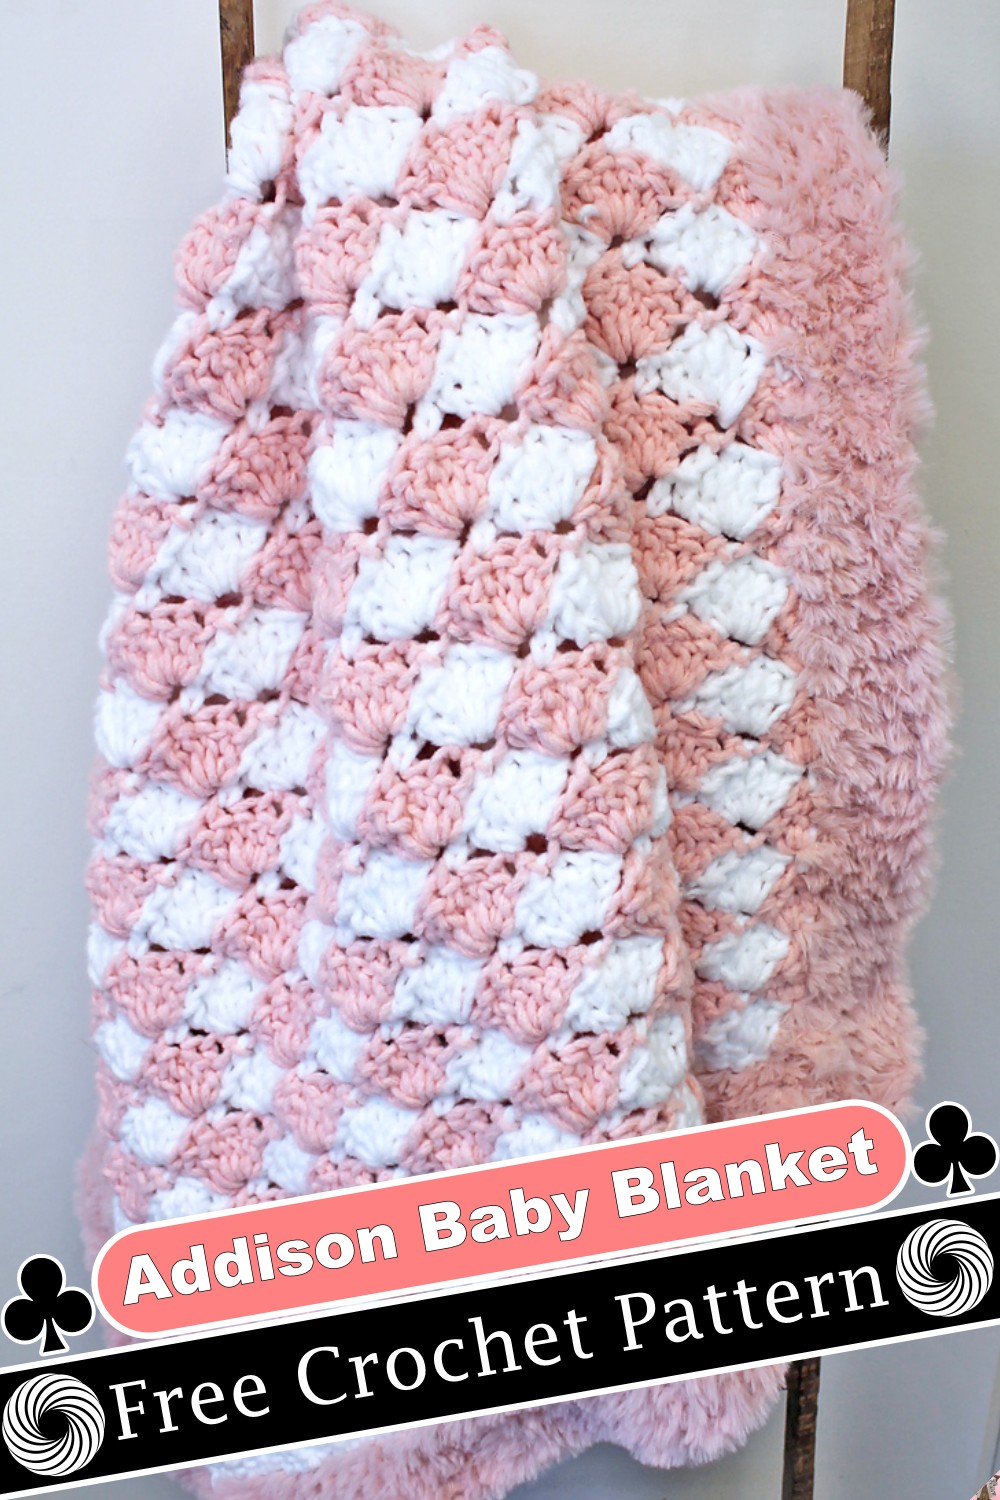 Addison Baby Blanket